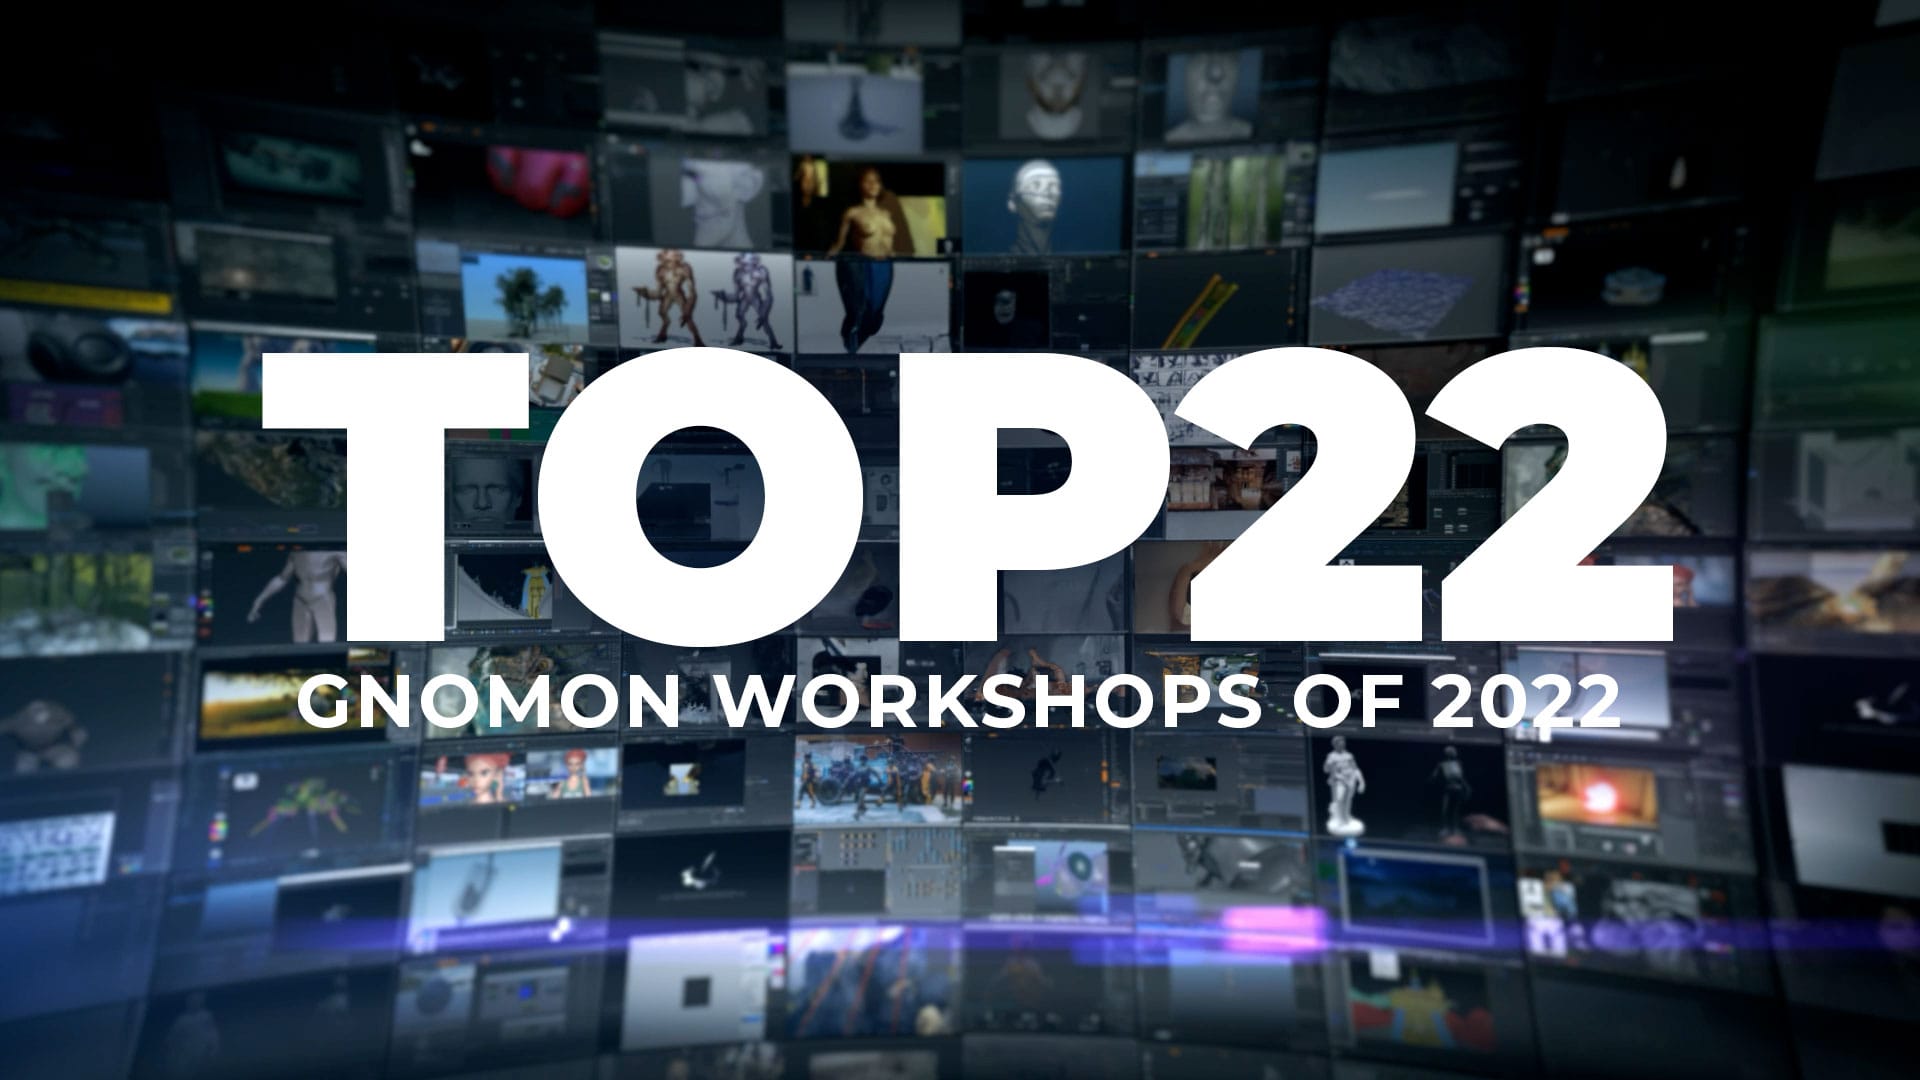 The Top 22 Gnomon Workshops of 2022